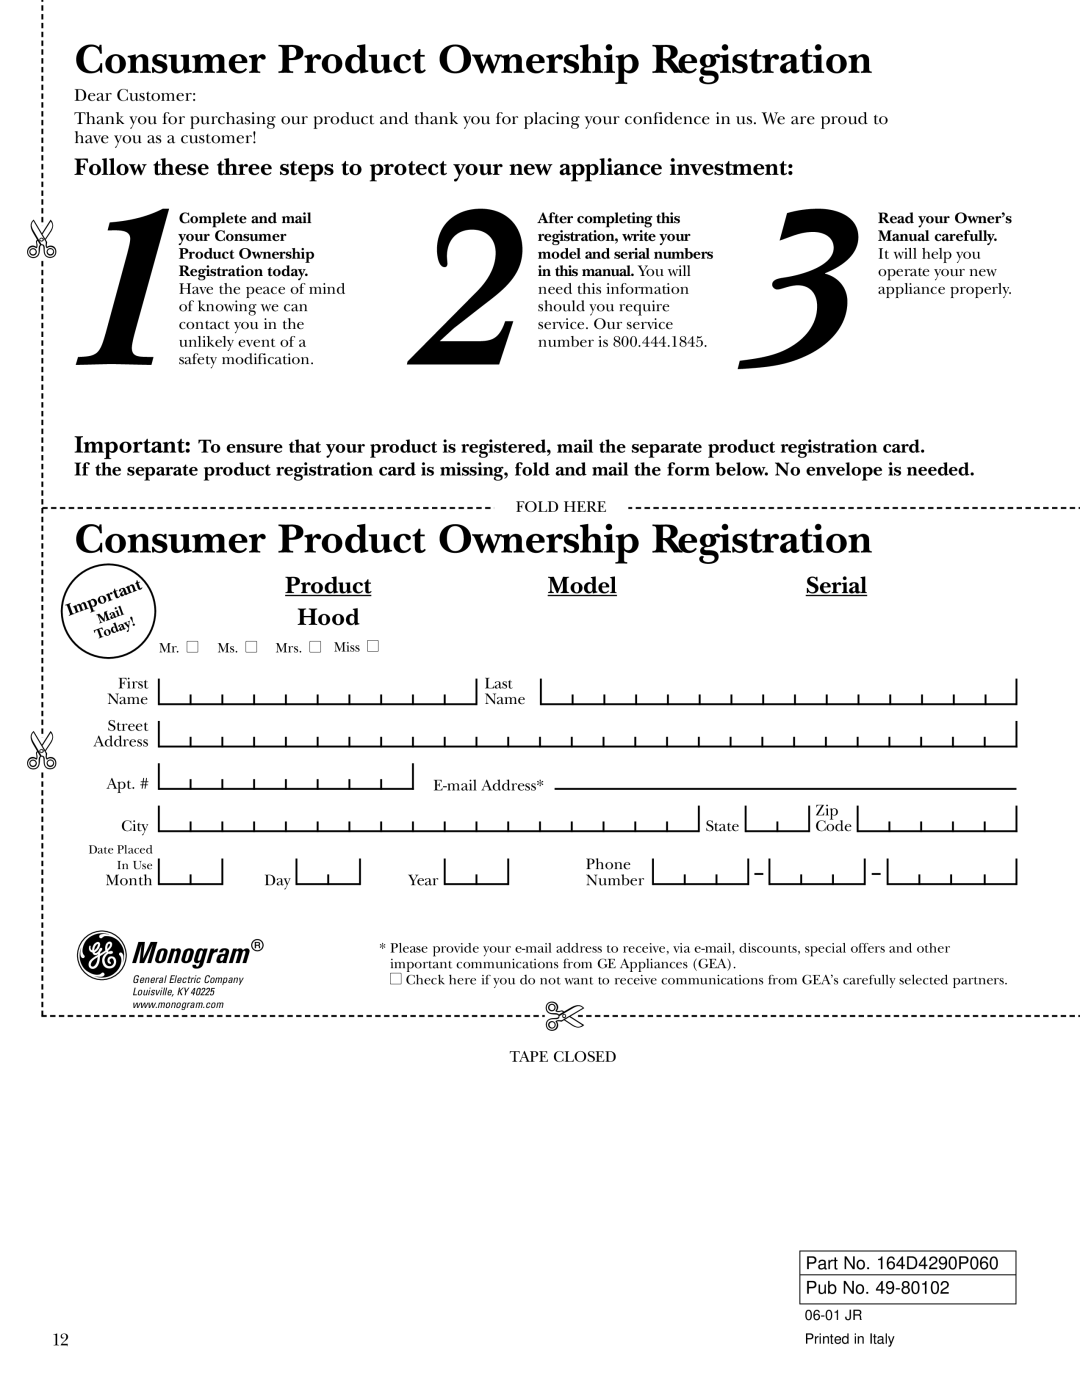 GE Ventilation Hood owner manual Consumer Product Ownership Registration, Model, Monogram, Serial 